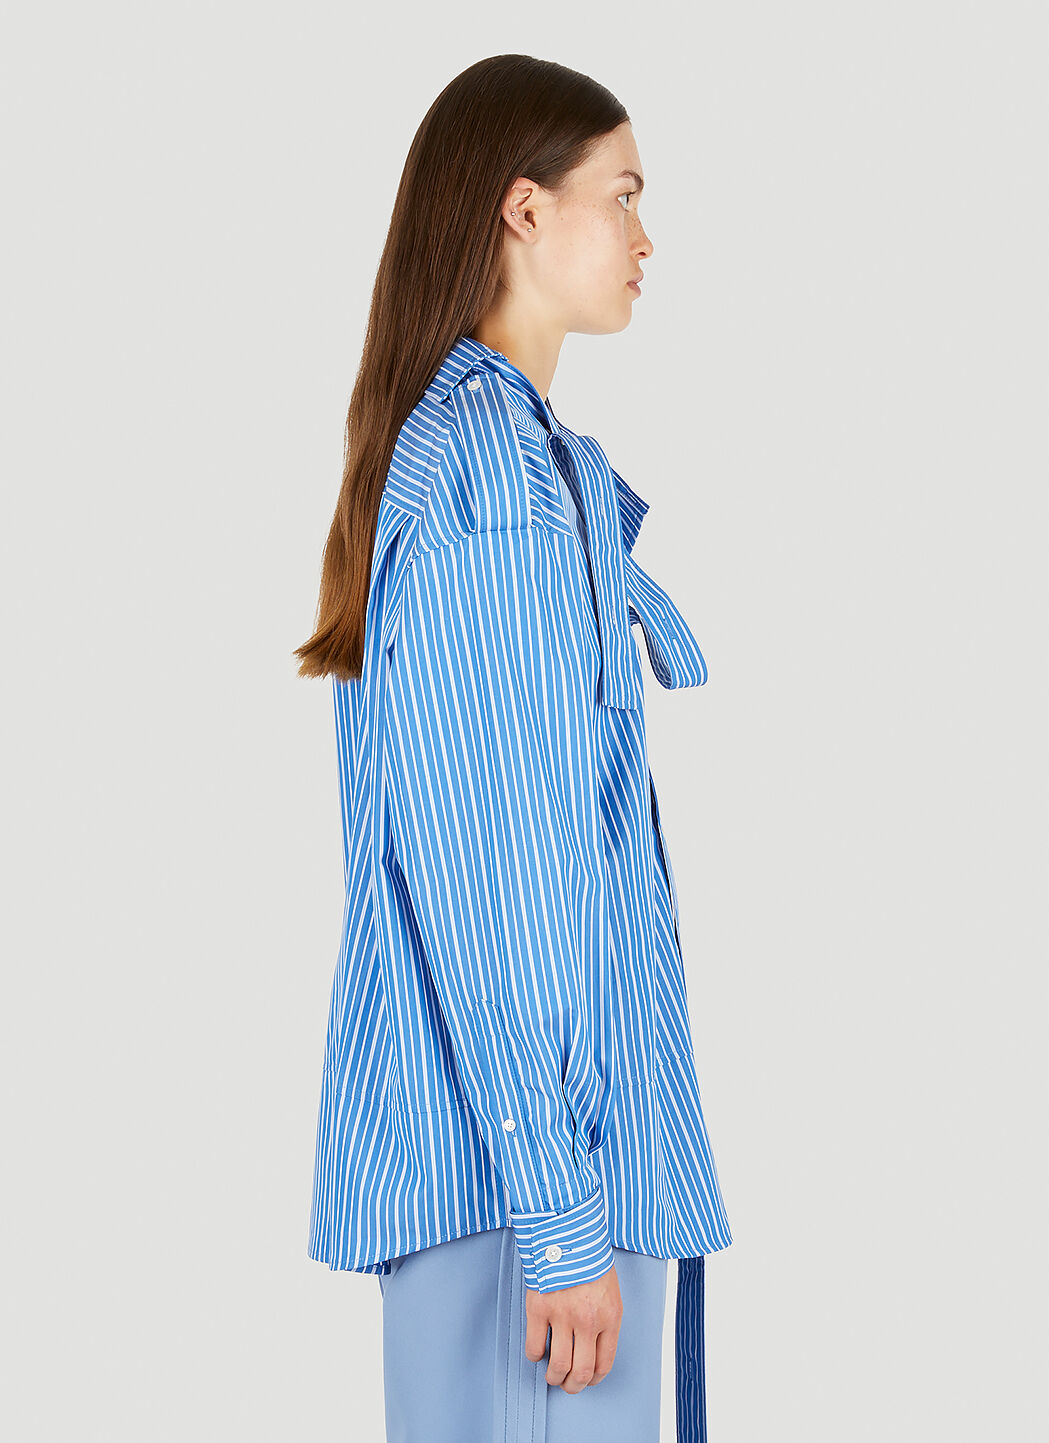 Meryll Rogge Deconstructed Mens Shirt in Blue | LN-CC®